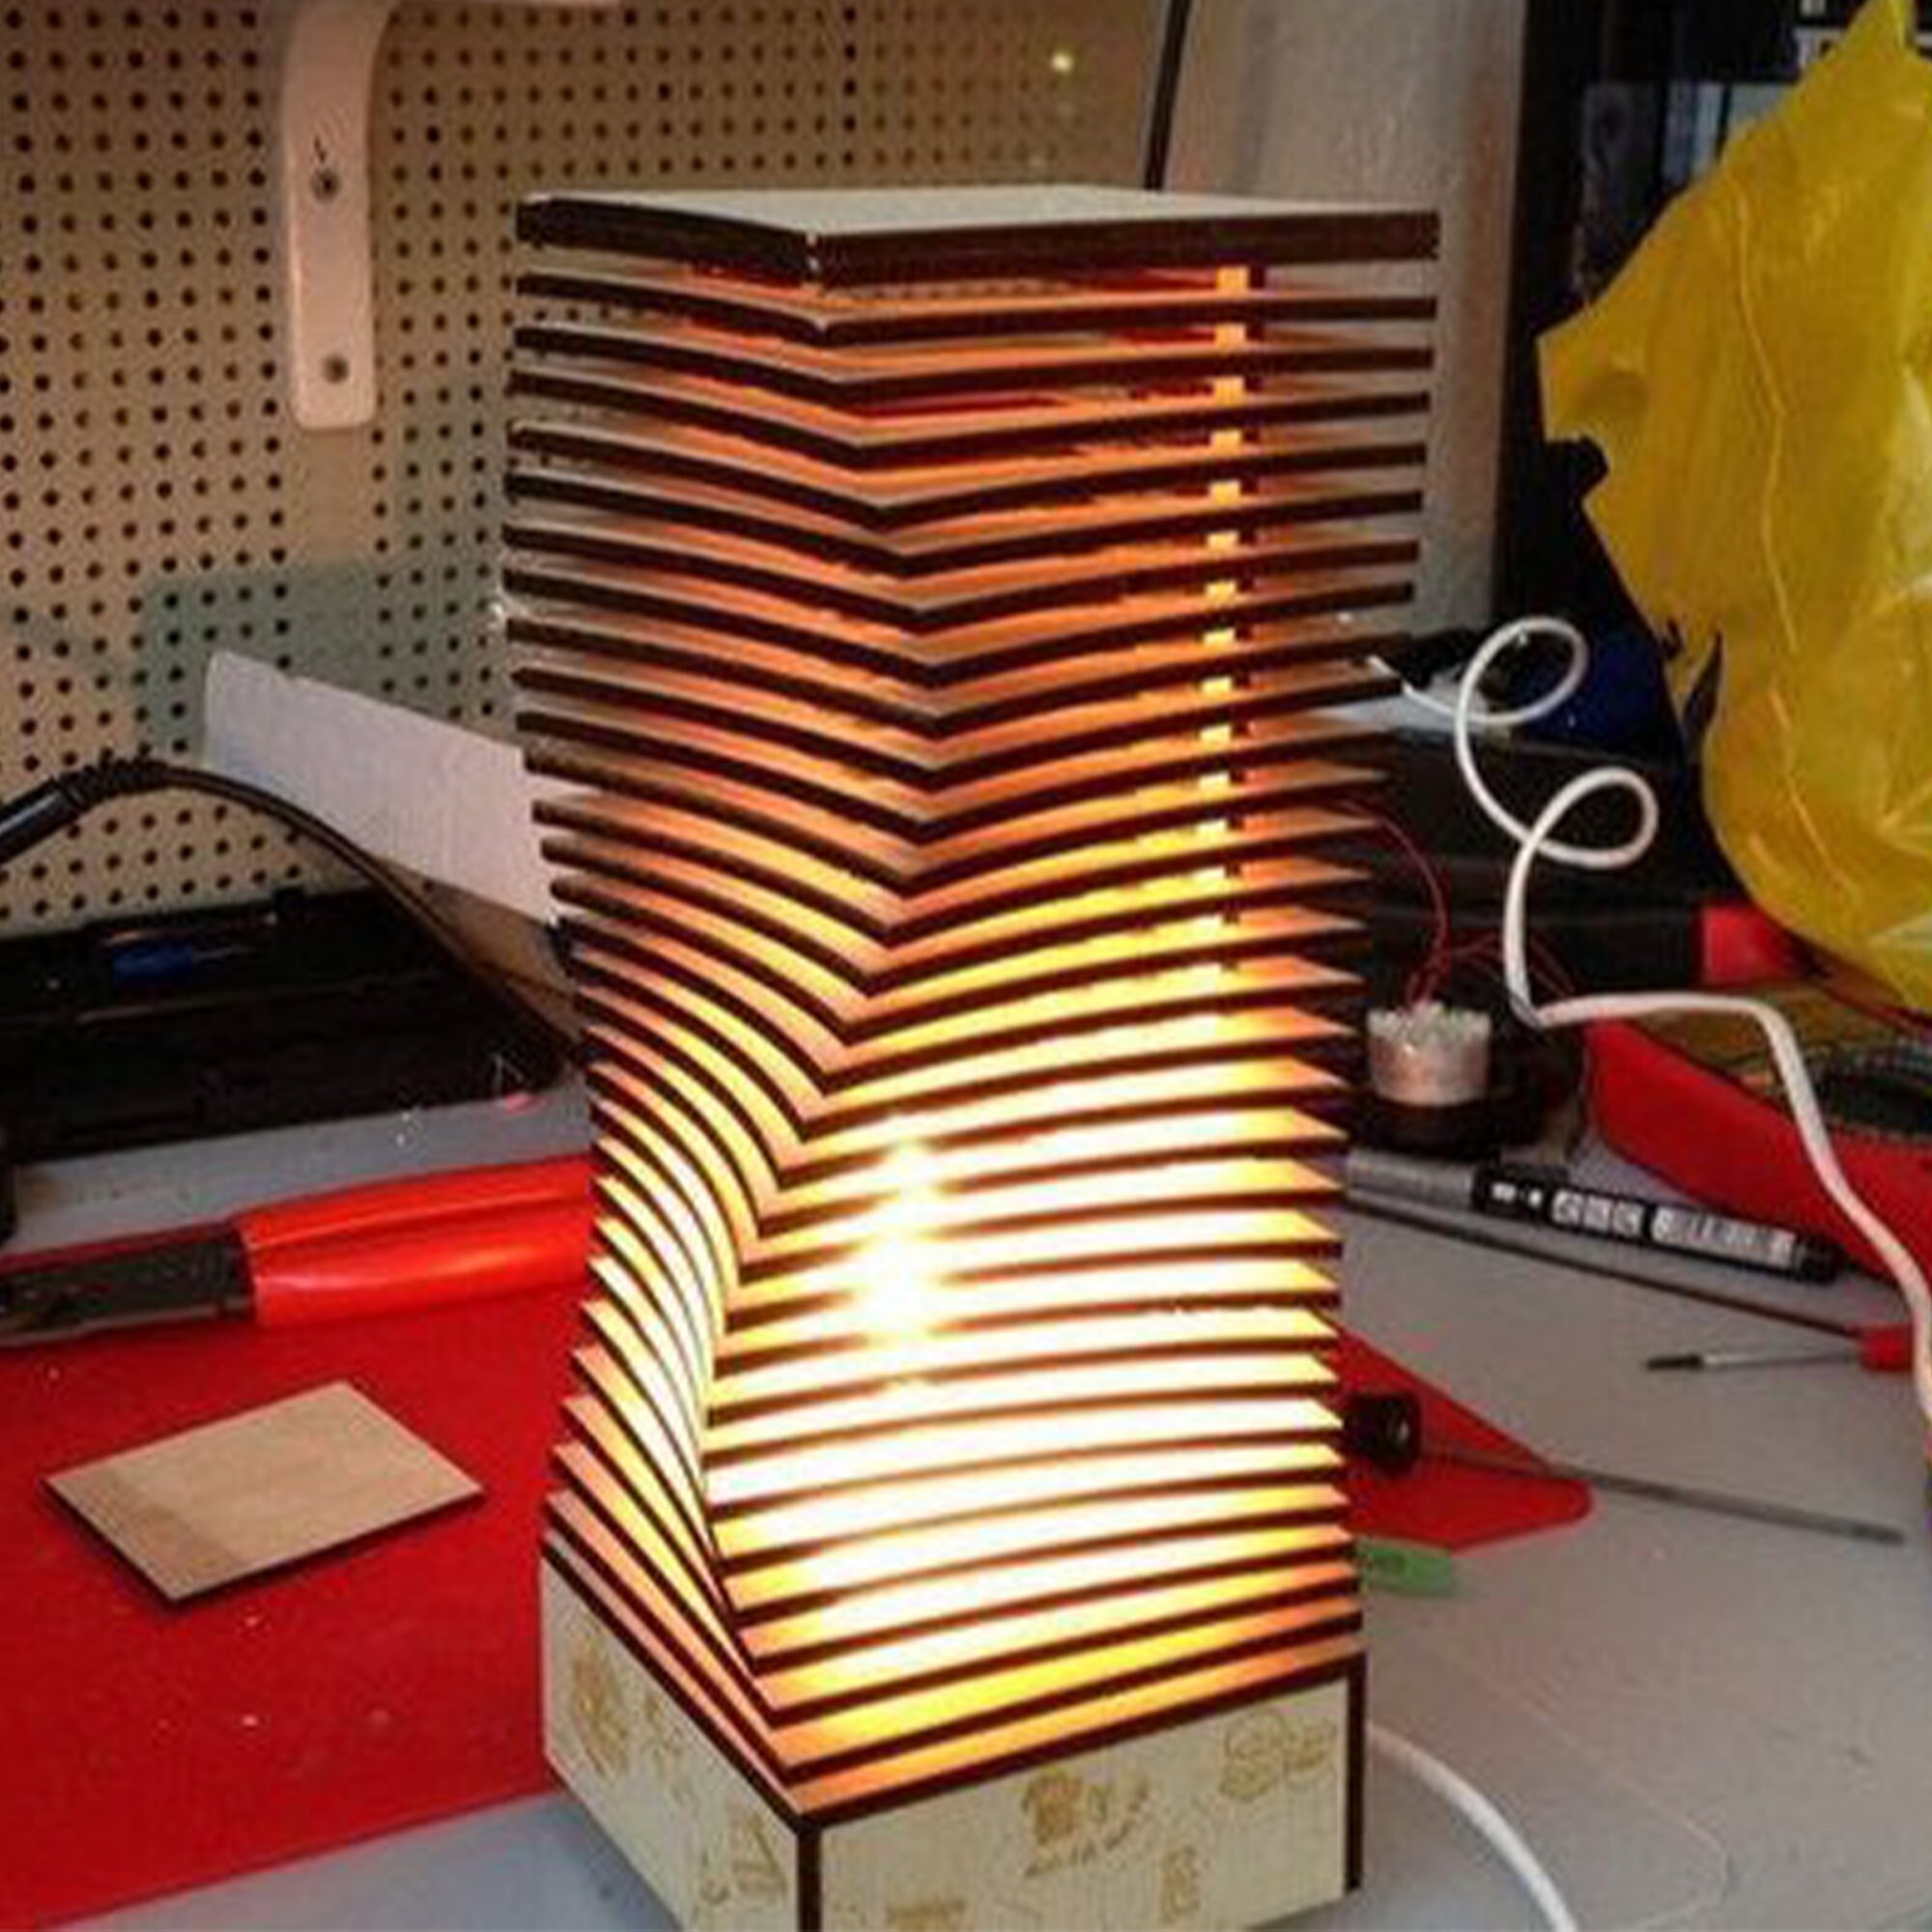 Laser-cut a paper table lamp